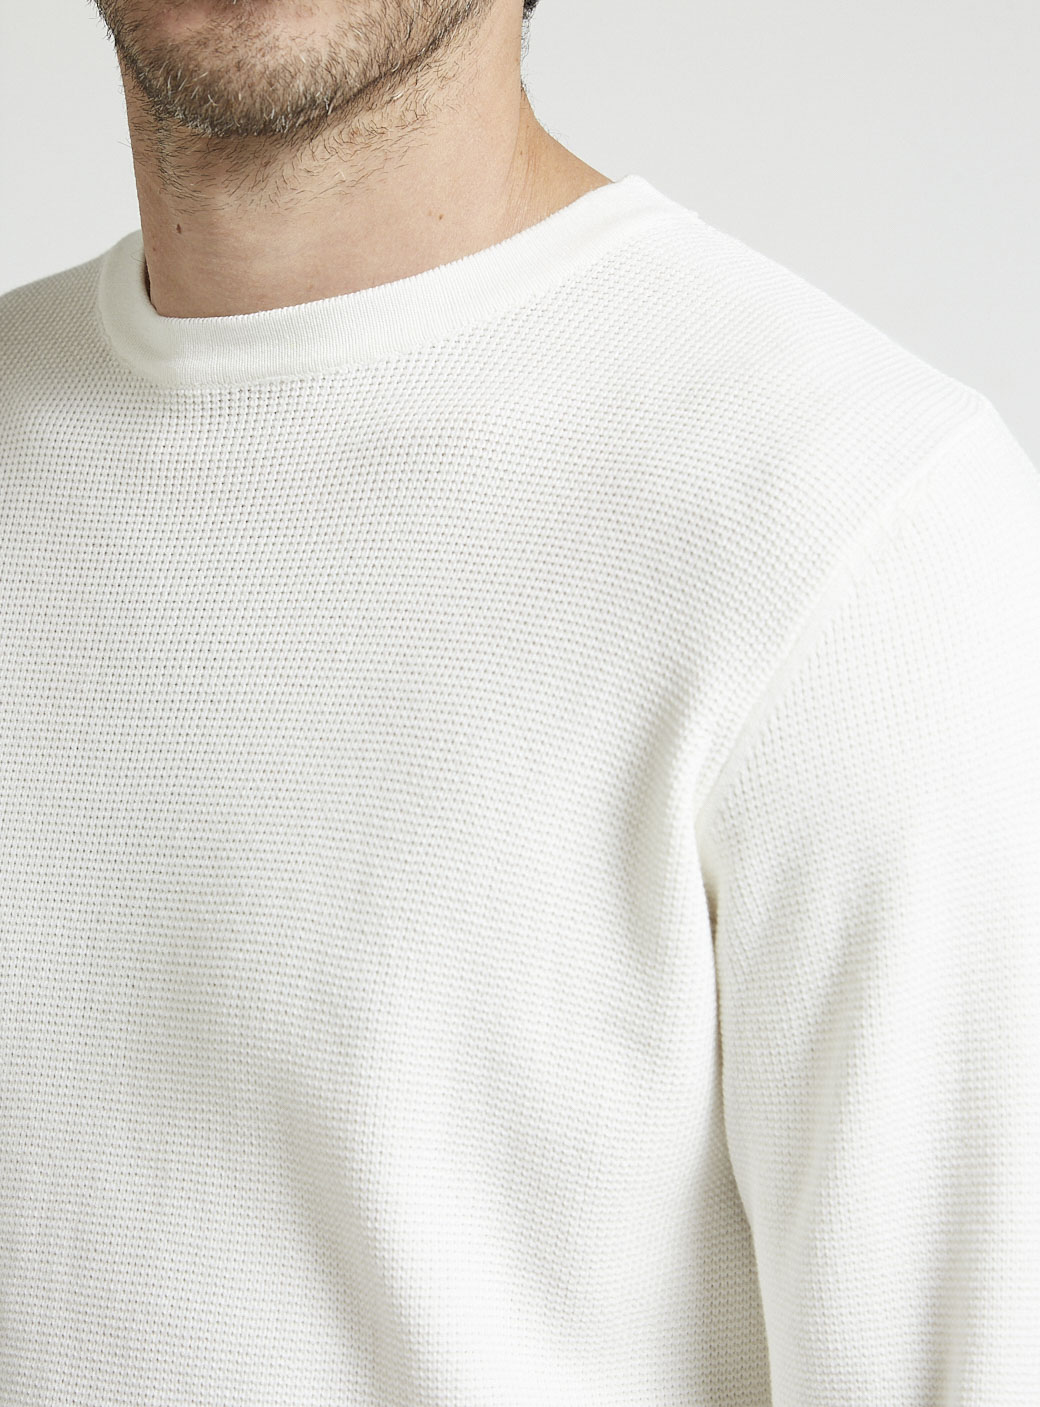 Sweater_Trama_Off_white_Rochas_4.jpg